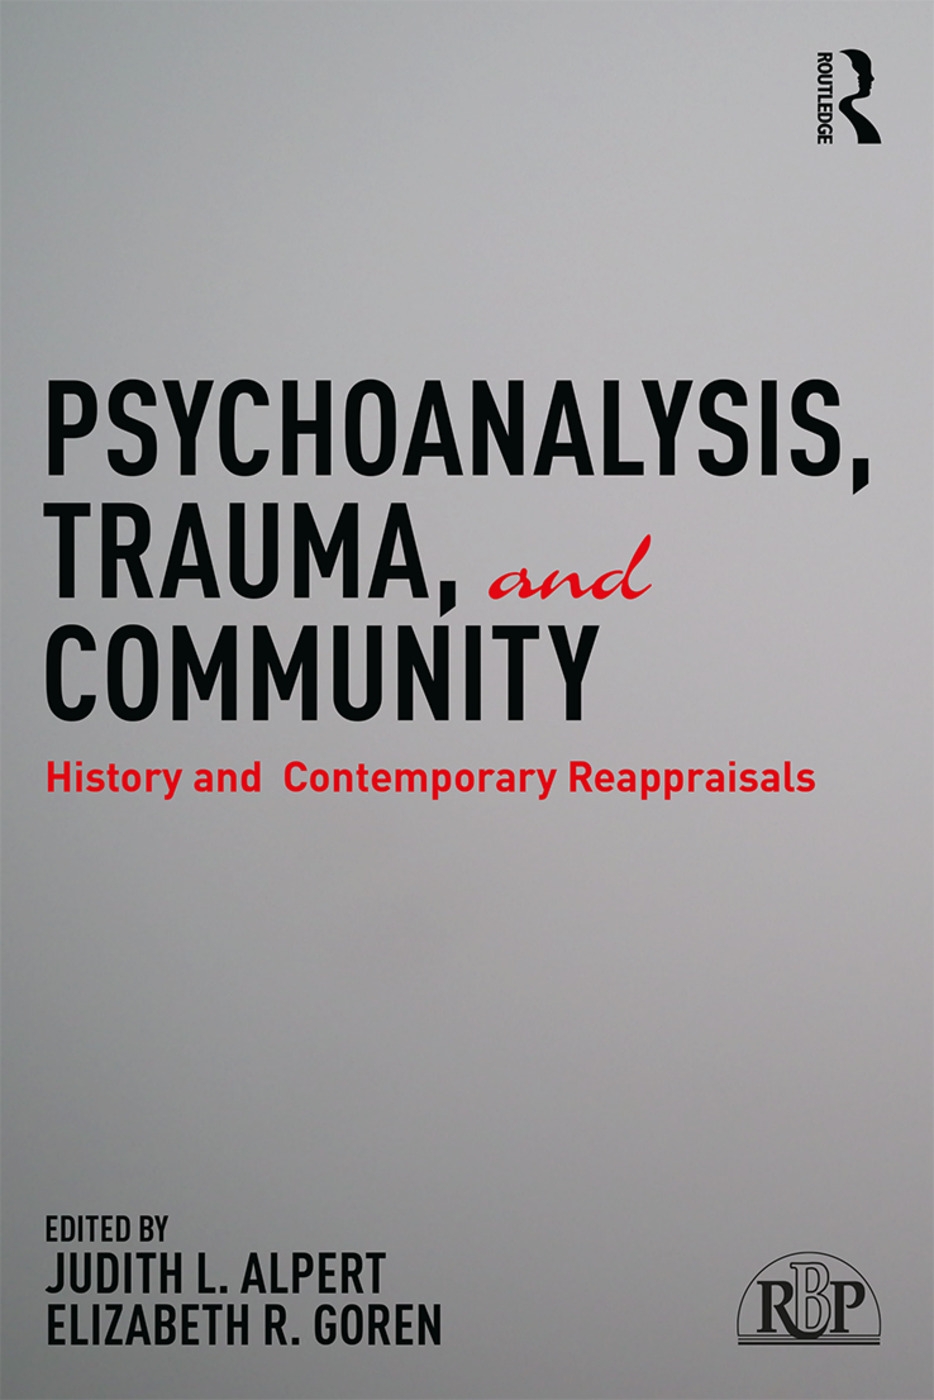 Psychoanalysis, Trauma, and Community: History and Contemporary Reappraisals